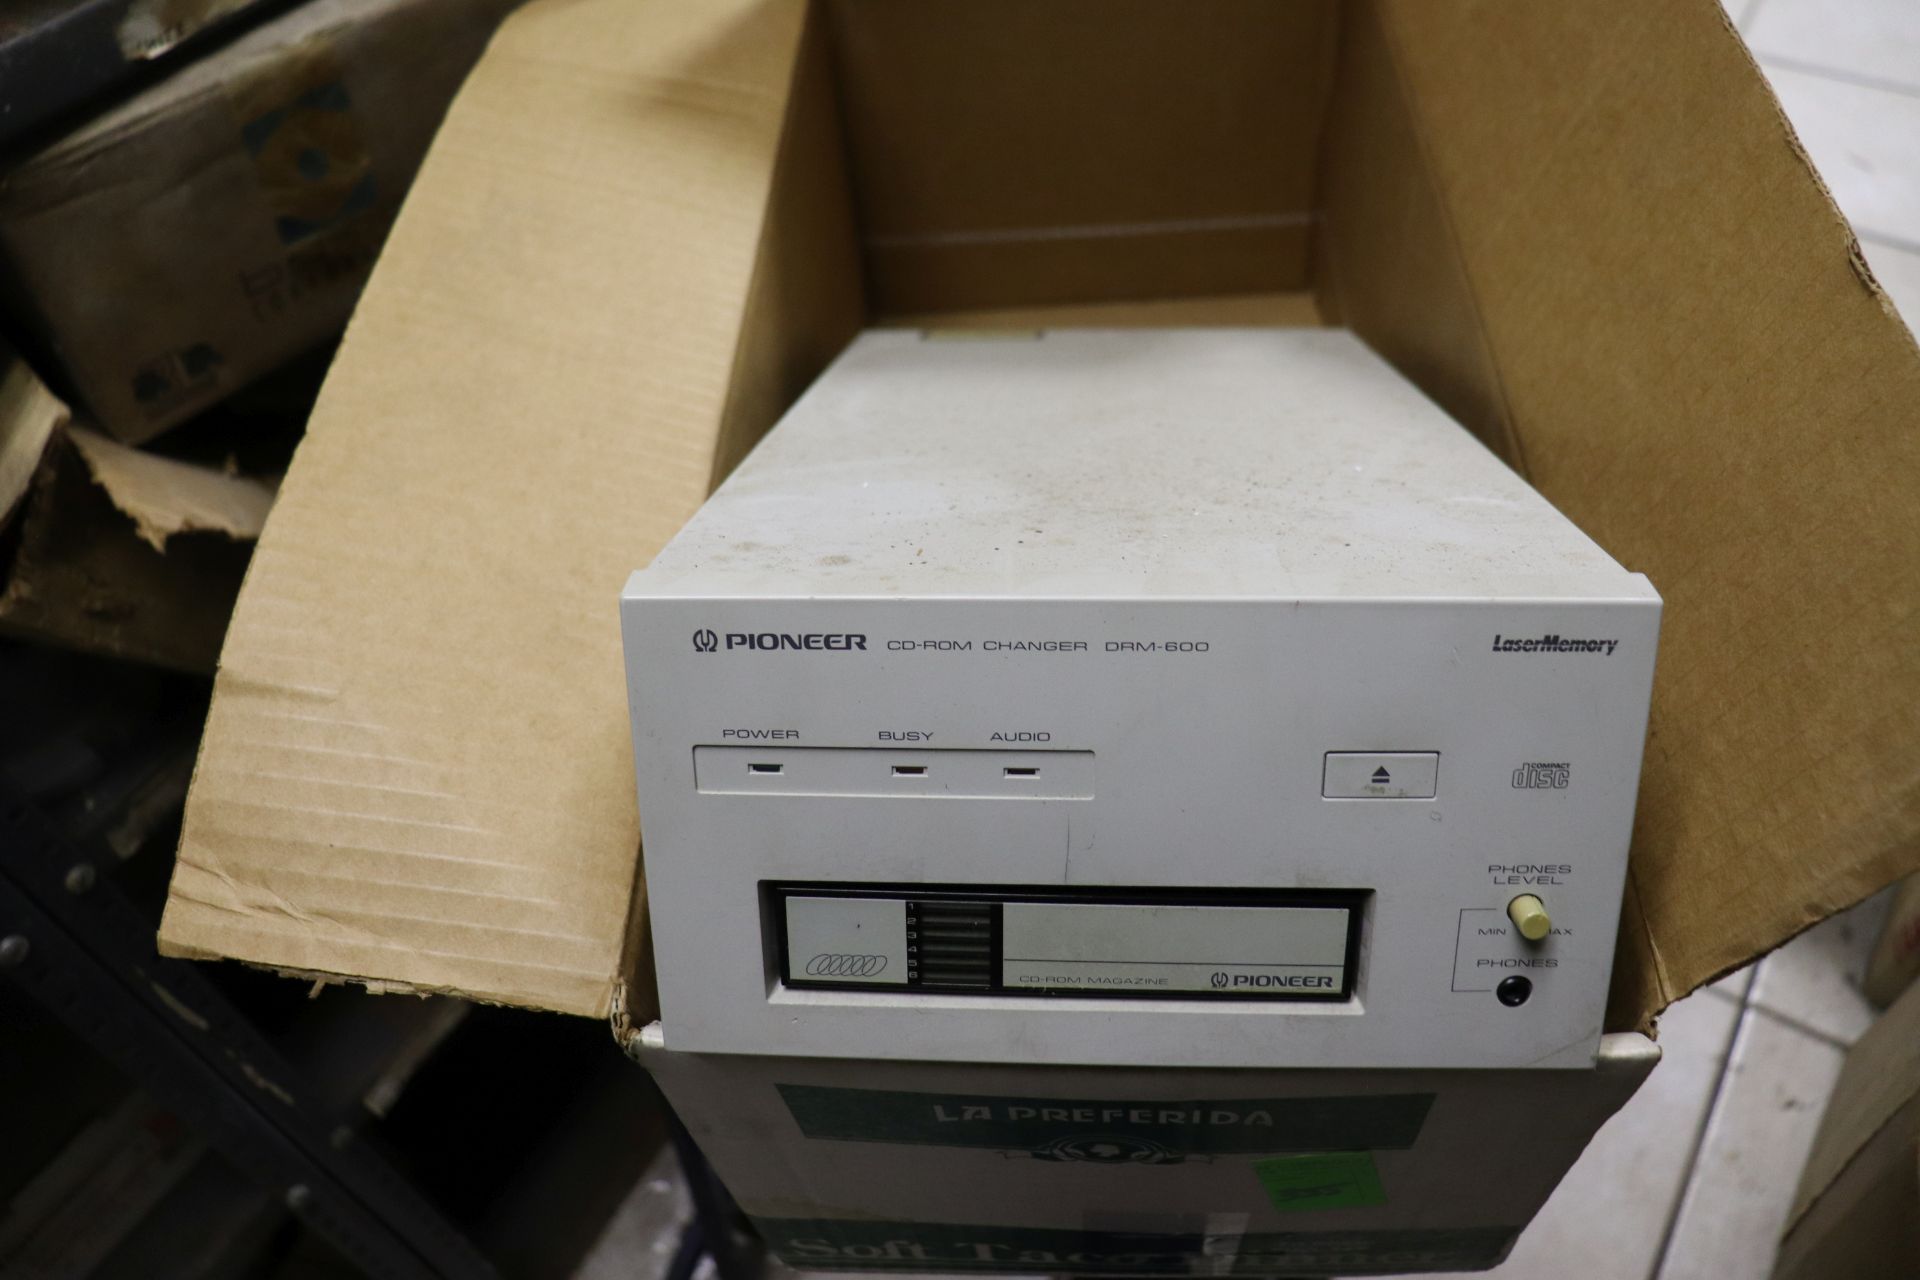 Pioneer CD Rom changer, model DRM-600